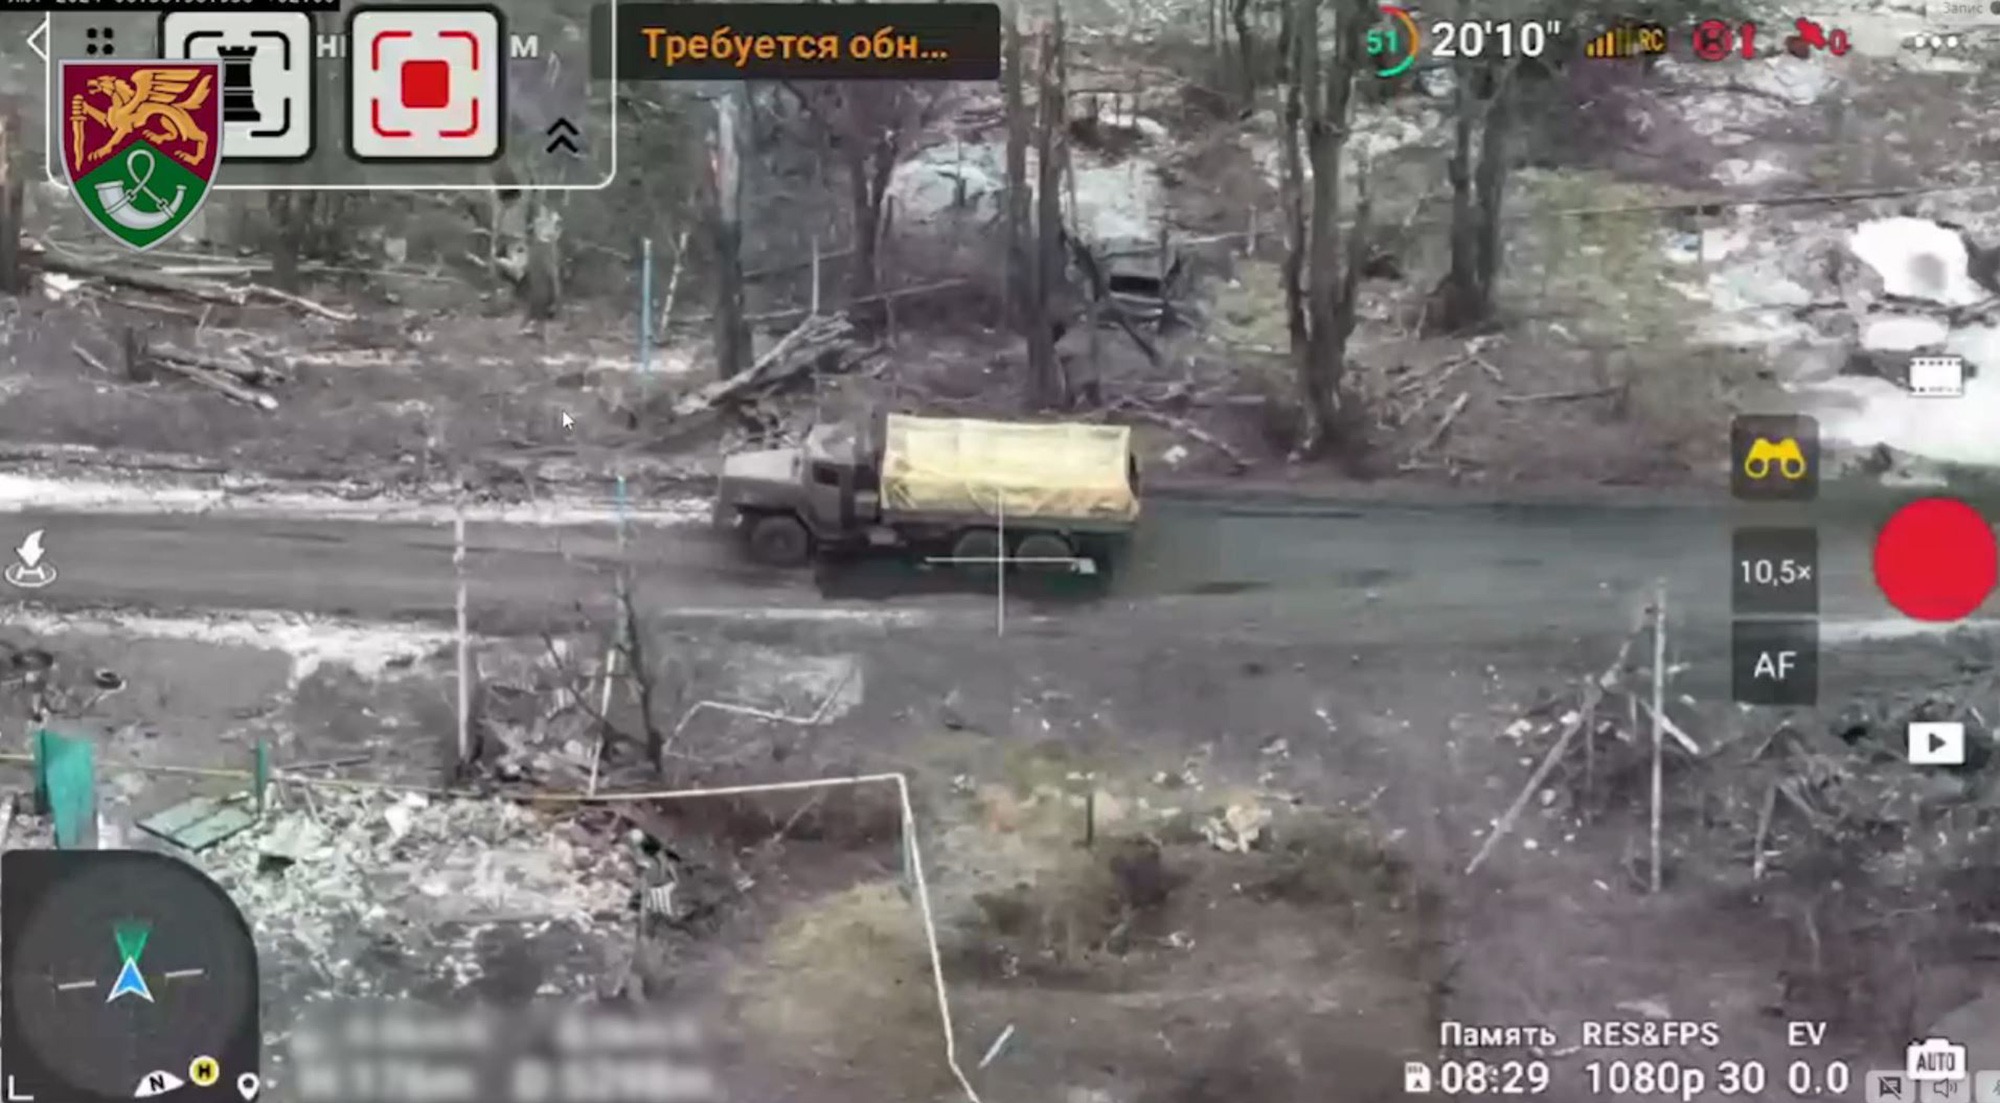 Ukrainian Kamikaze Drones Destroy Russian Military Vehicles And Equipment